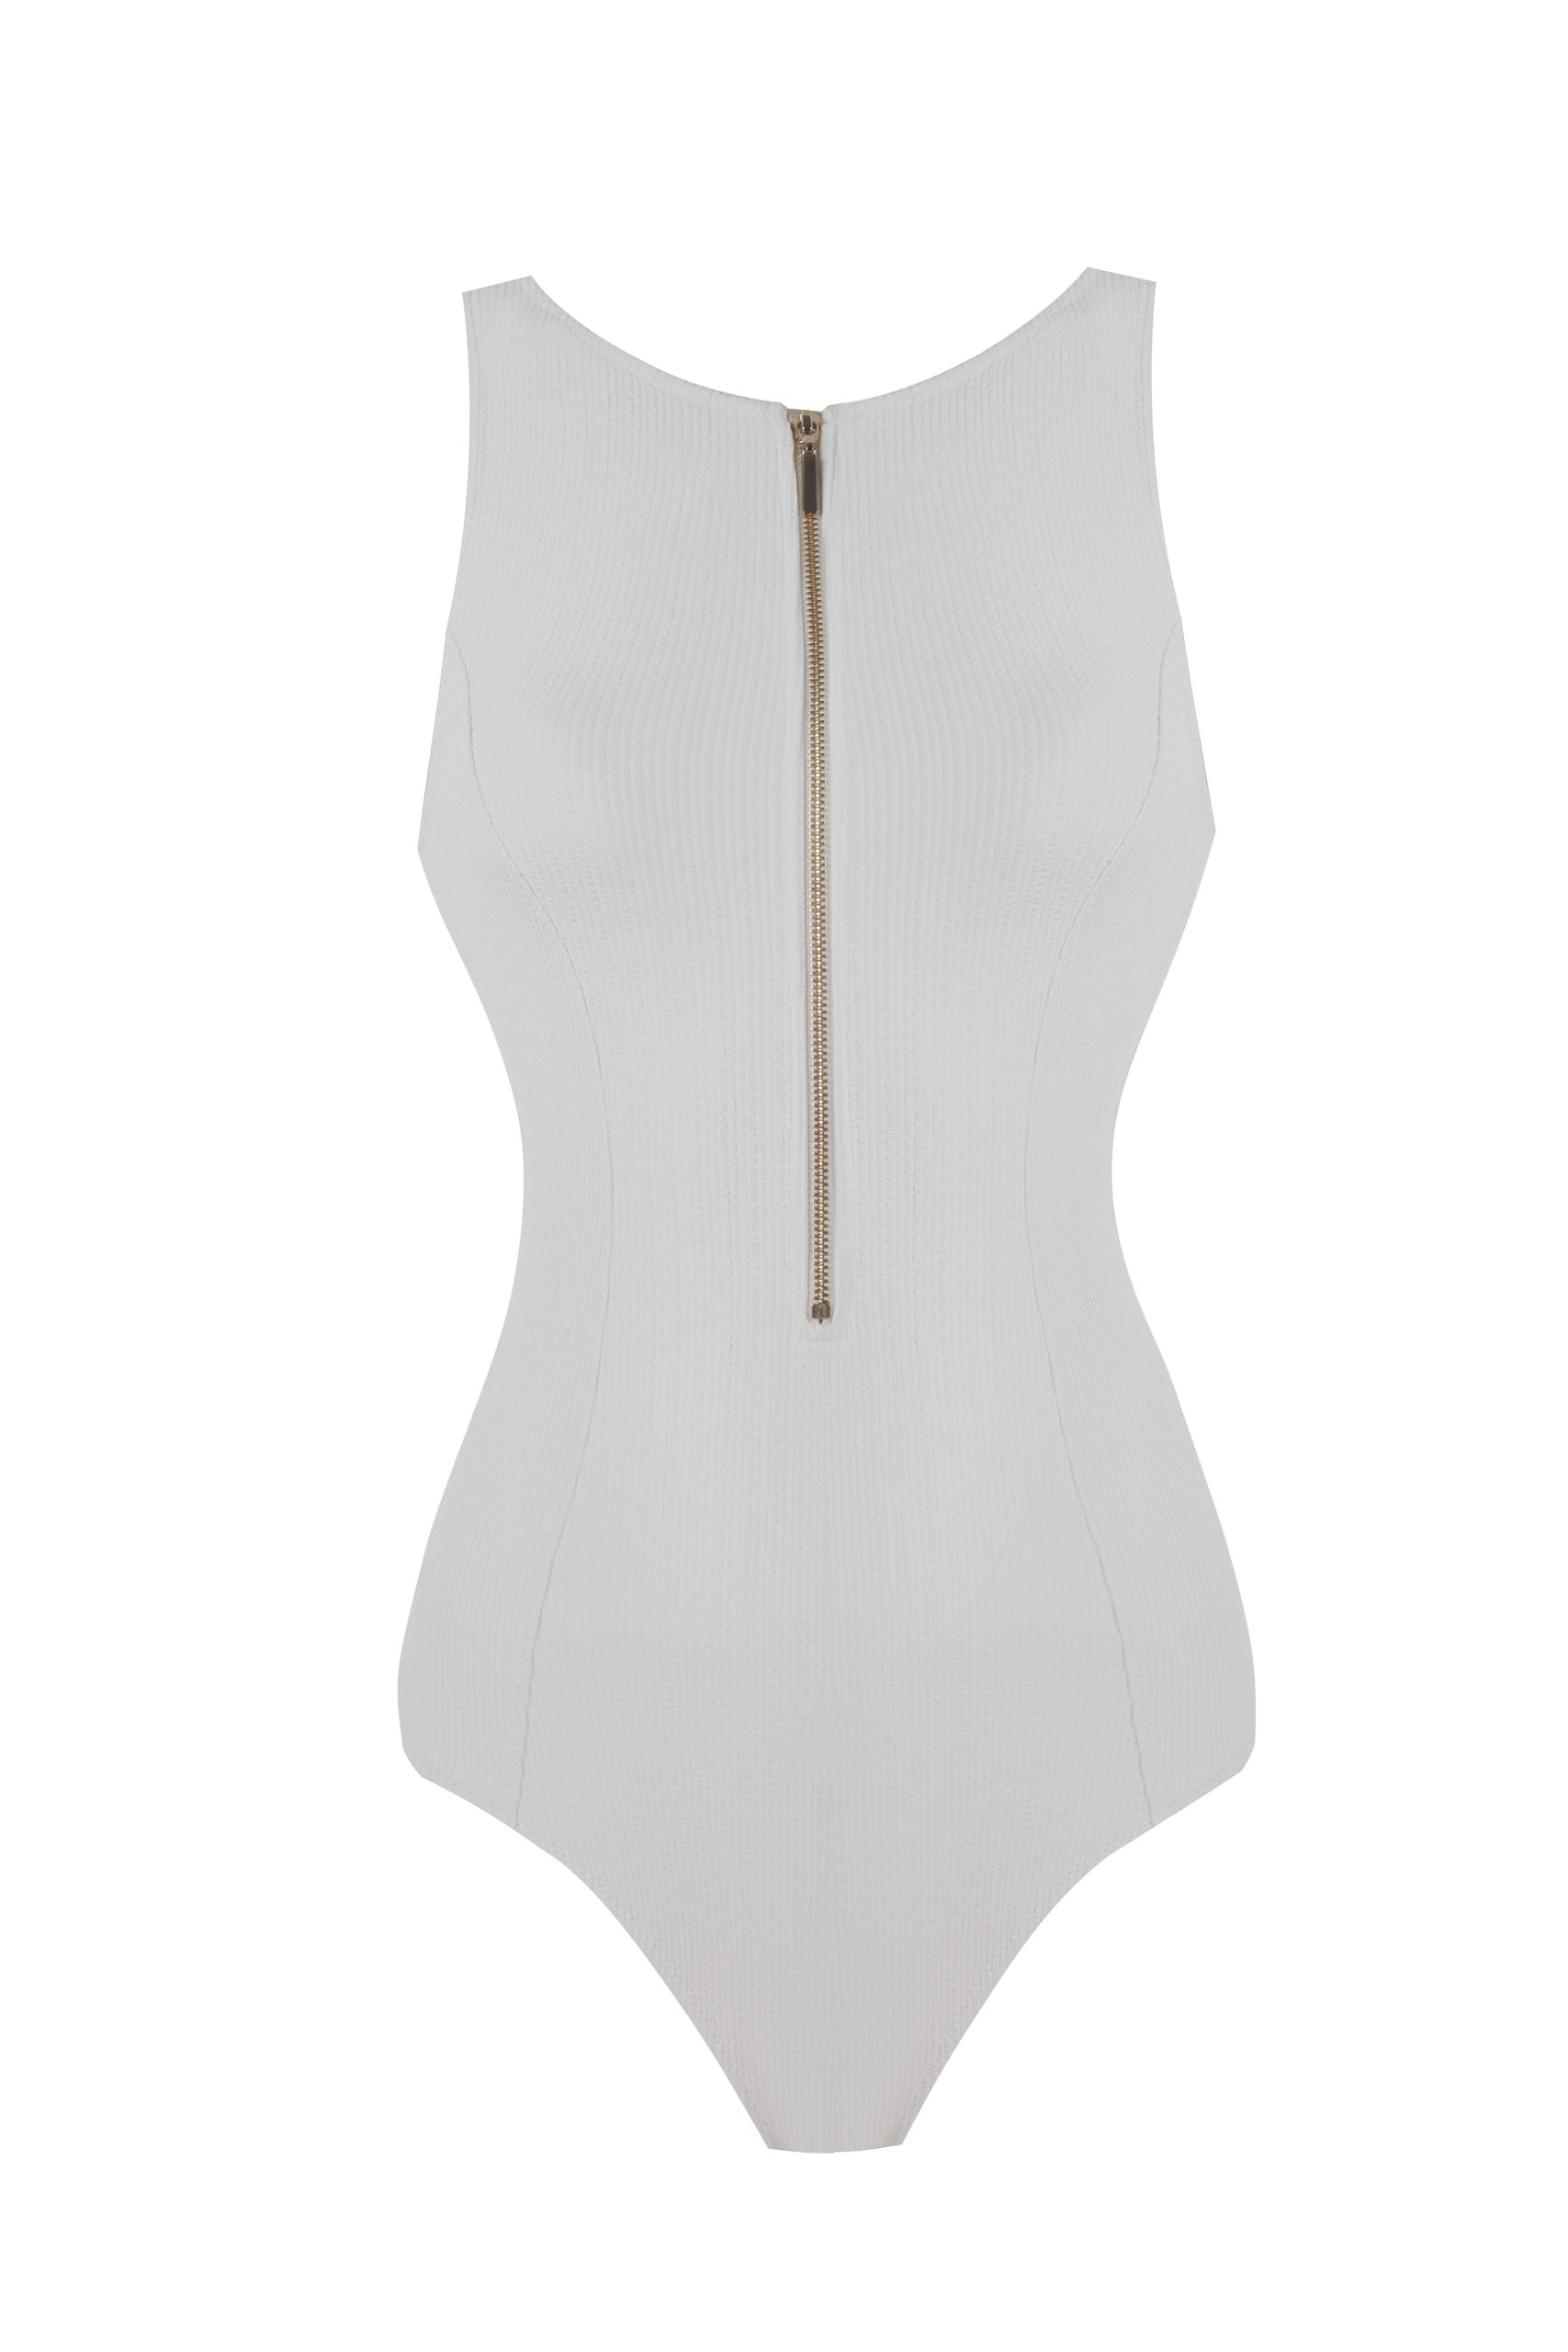 Clarette Ivory Textured Swimsuit